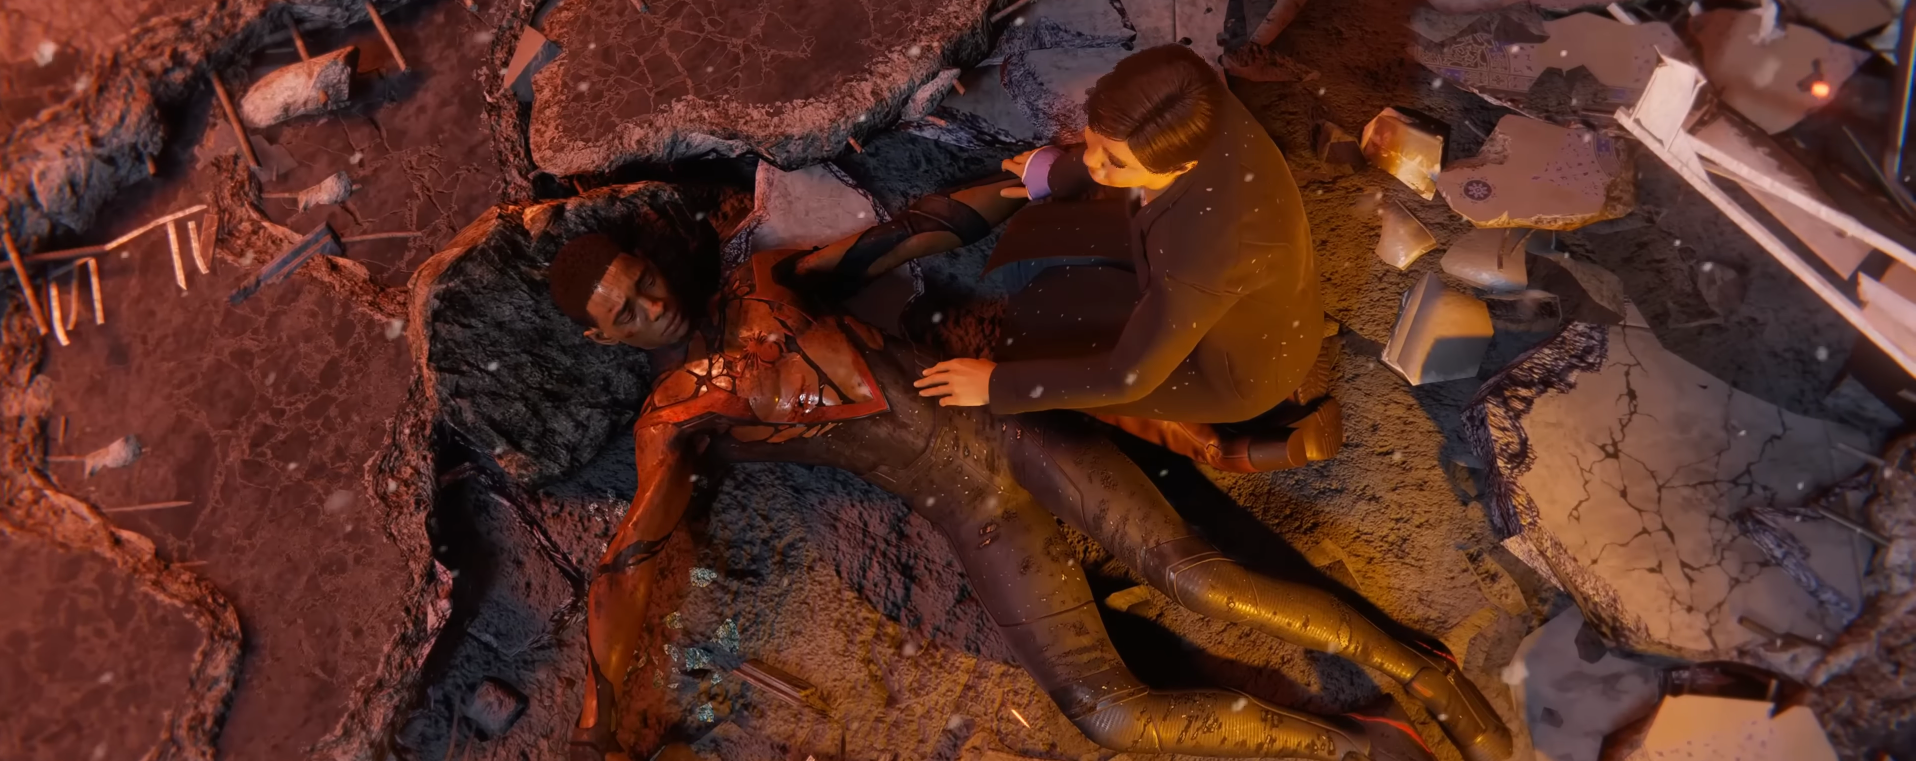 A screenshot showing Miles Morales Spider-Man's suit damage in Marvel's Spider-Man,